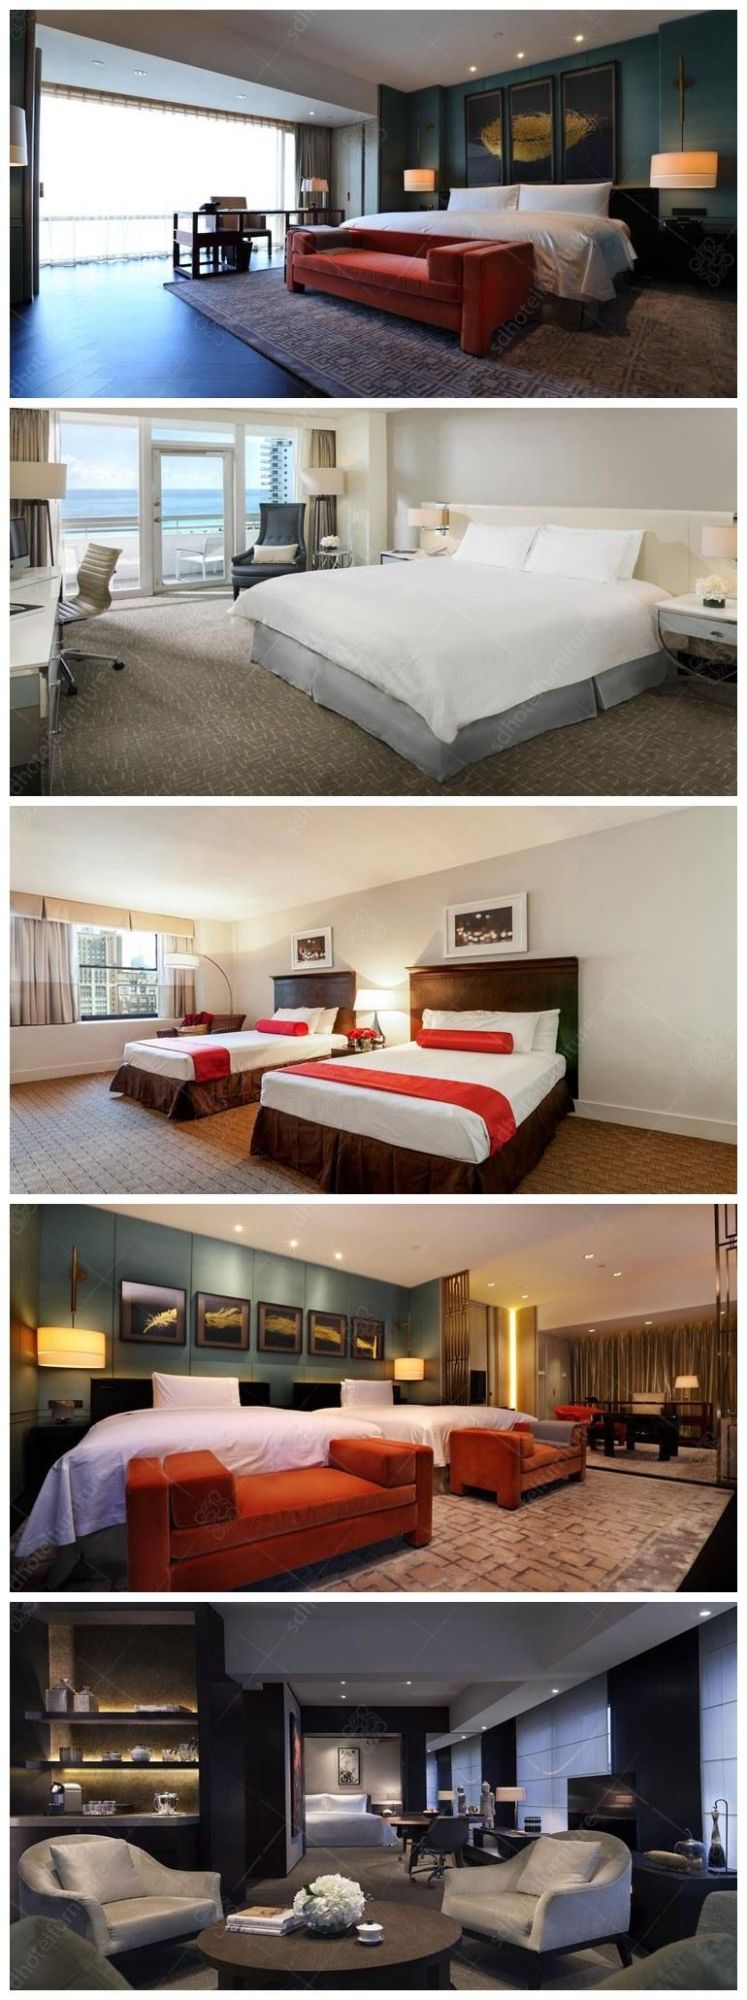 Holiday Inn 5-Star Luxury Europe Modern Style Hotel Foshan Furniture Design SD1144